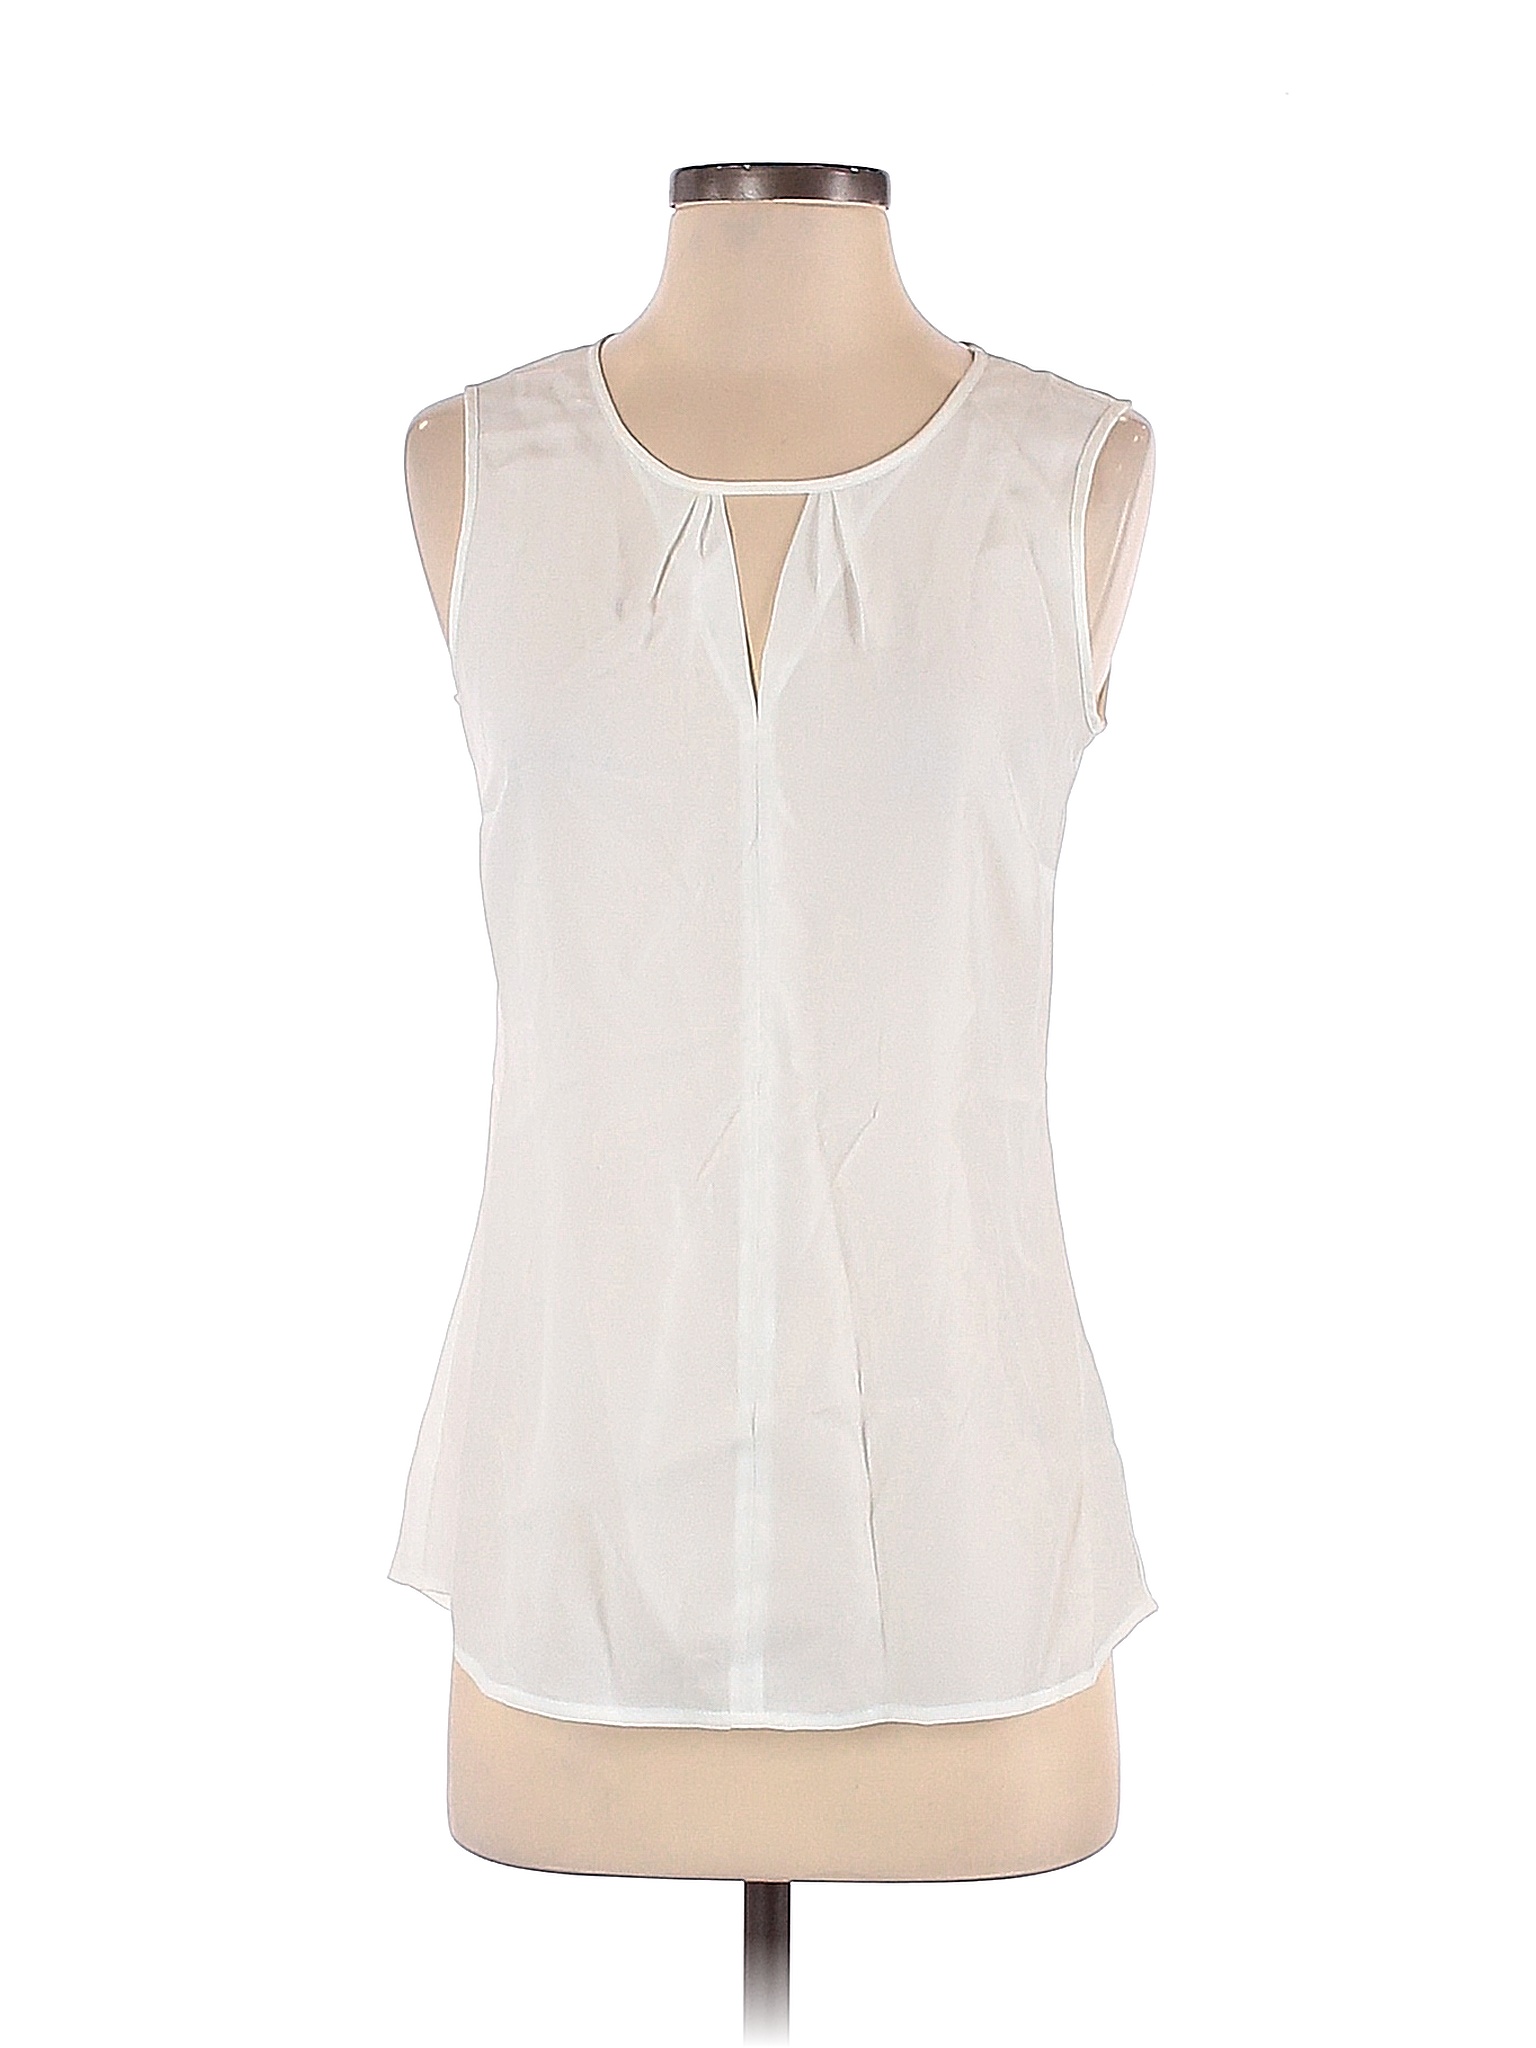 Nic + Zoe 100% Polyester Solid White Sleeveless Blouse Size XS - 80% ...